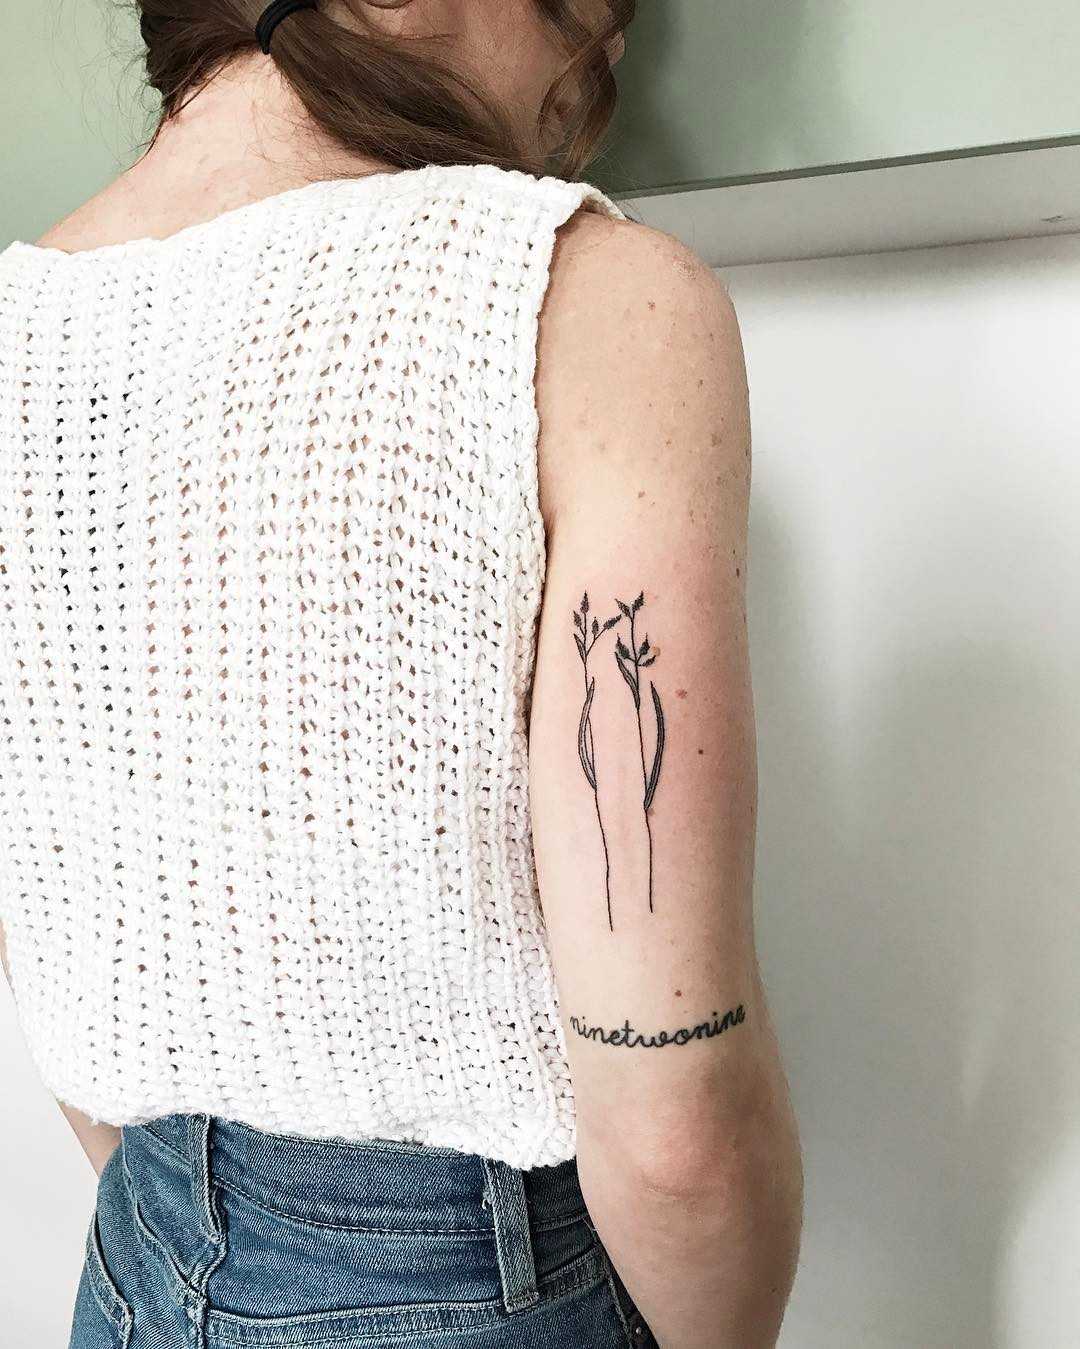 Simple spring stems tattoo by Kelli Kikcio